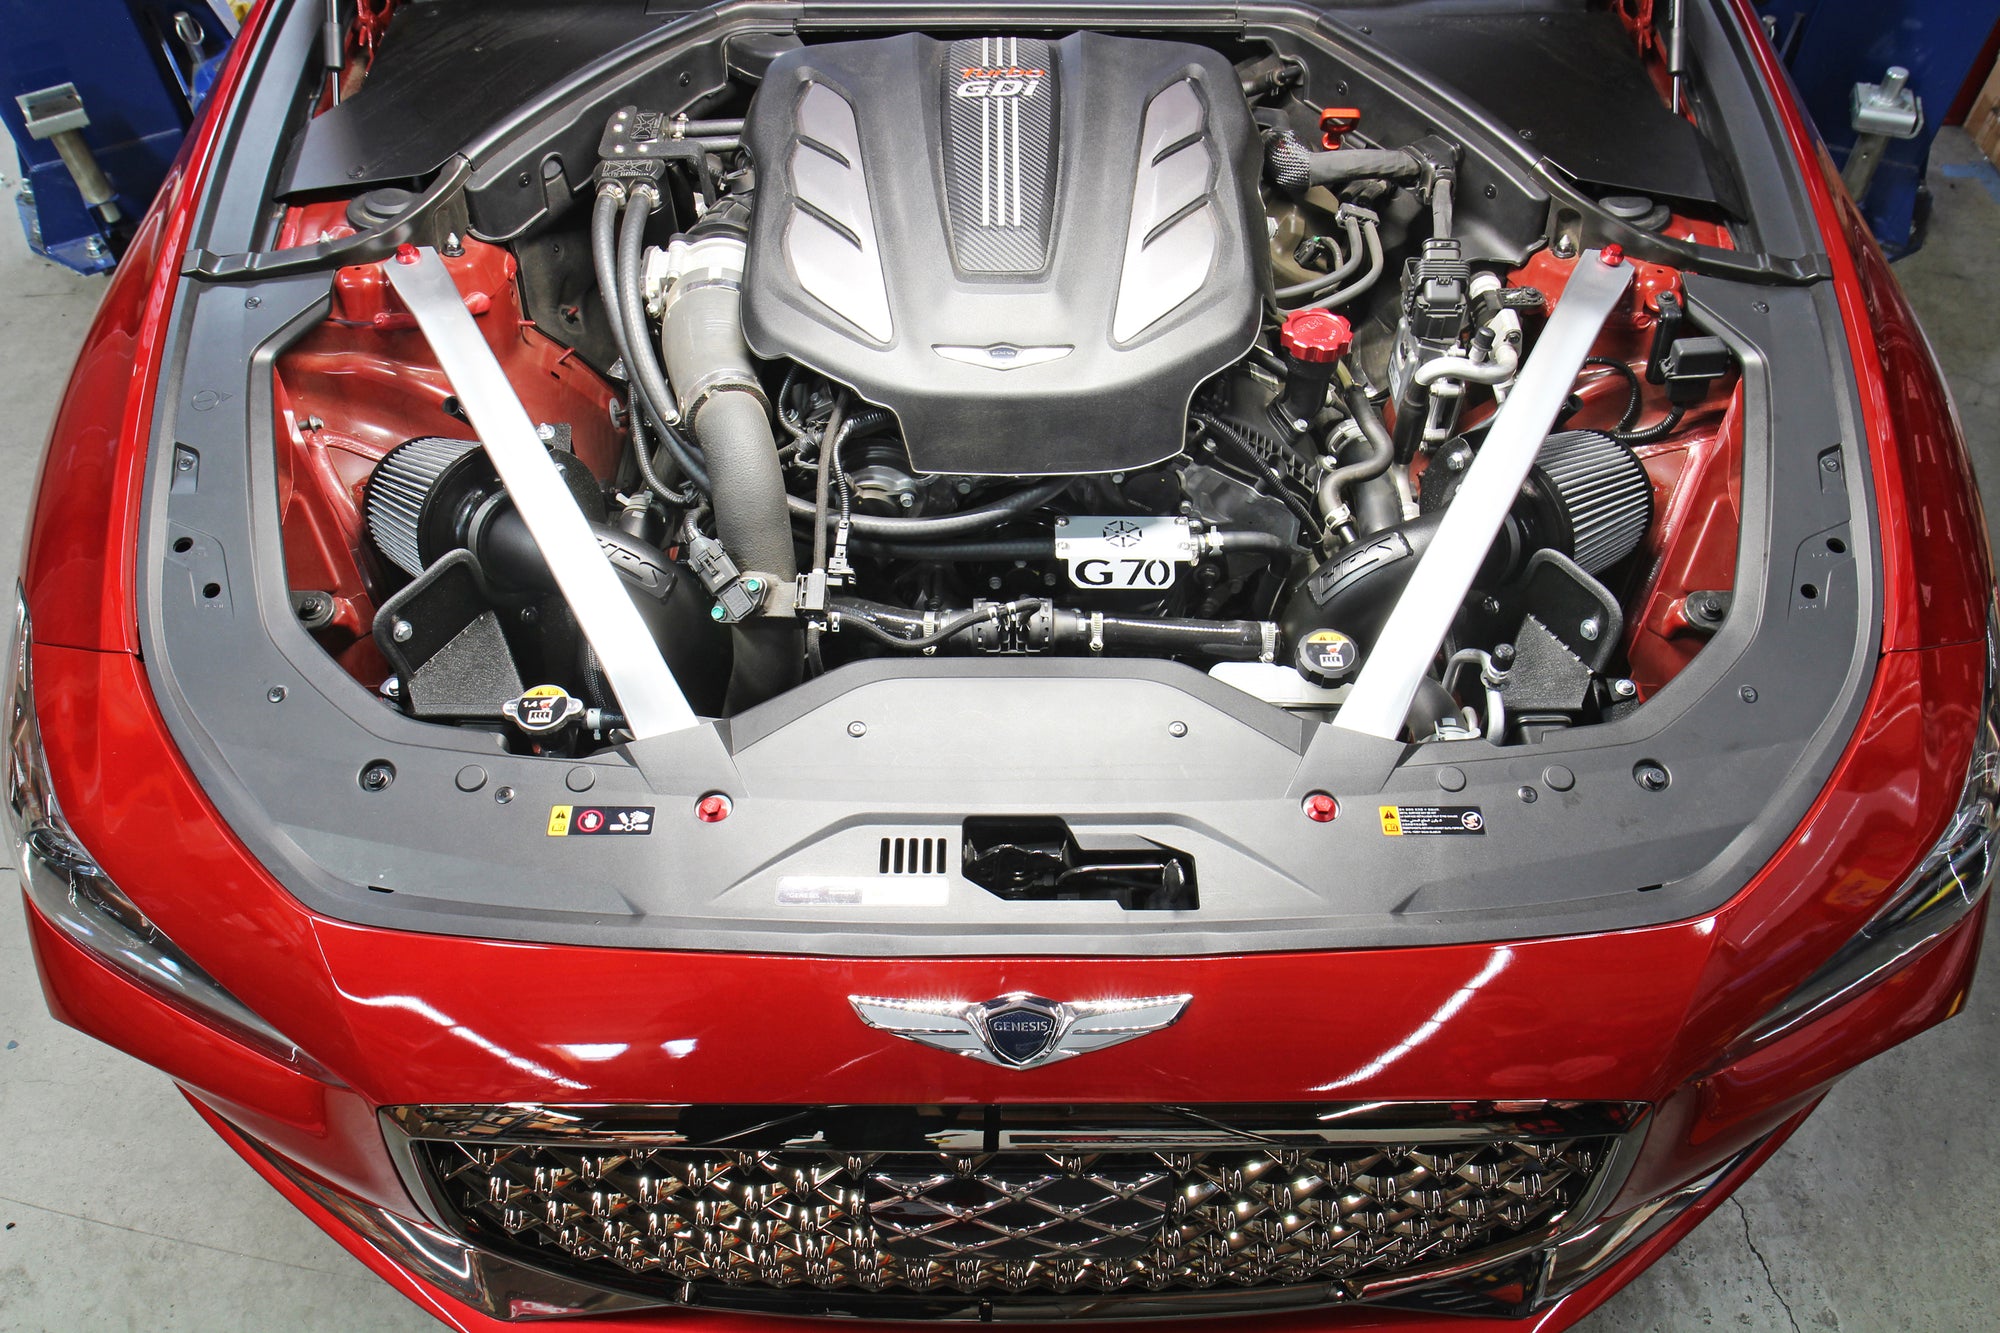 HPS Black Cold Air Intake Kit with Heat Shield 2019-2021 Hyundai Genesis G70 3.3L V6 Twin Turbo, 827-703WB